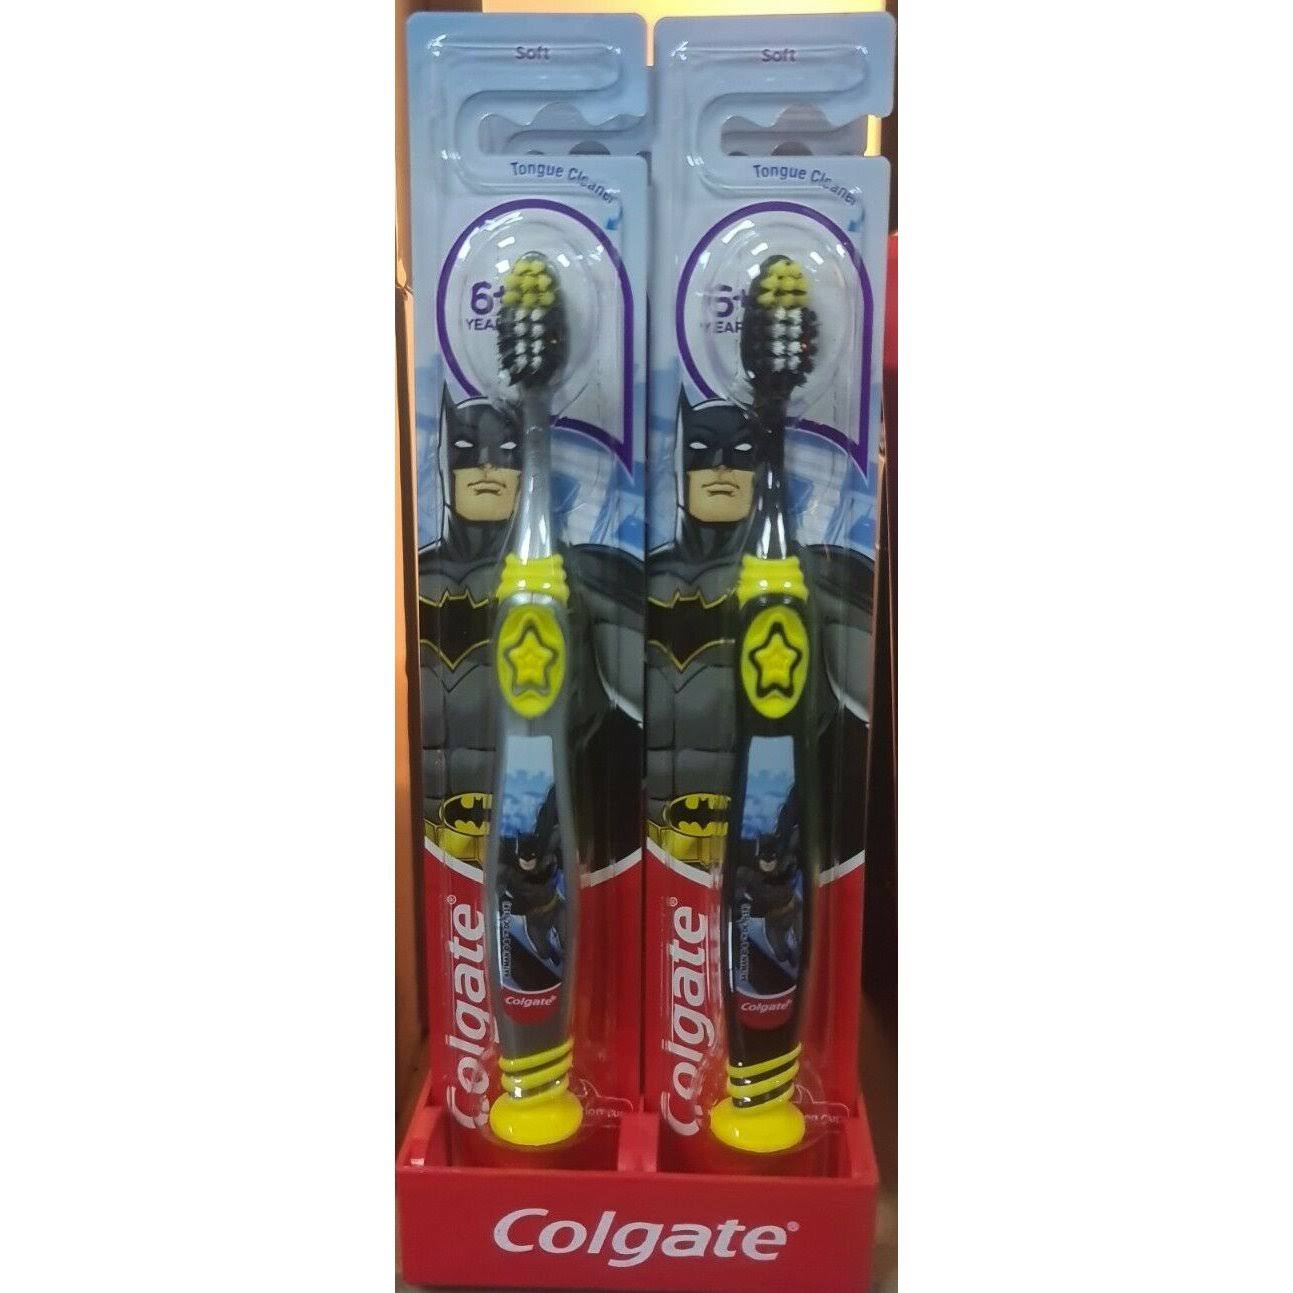 Colgate 360 Optic White Toothbrush - 1 Unit, Soft